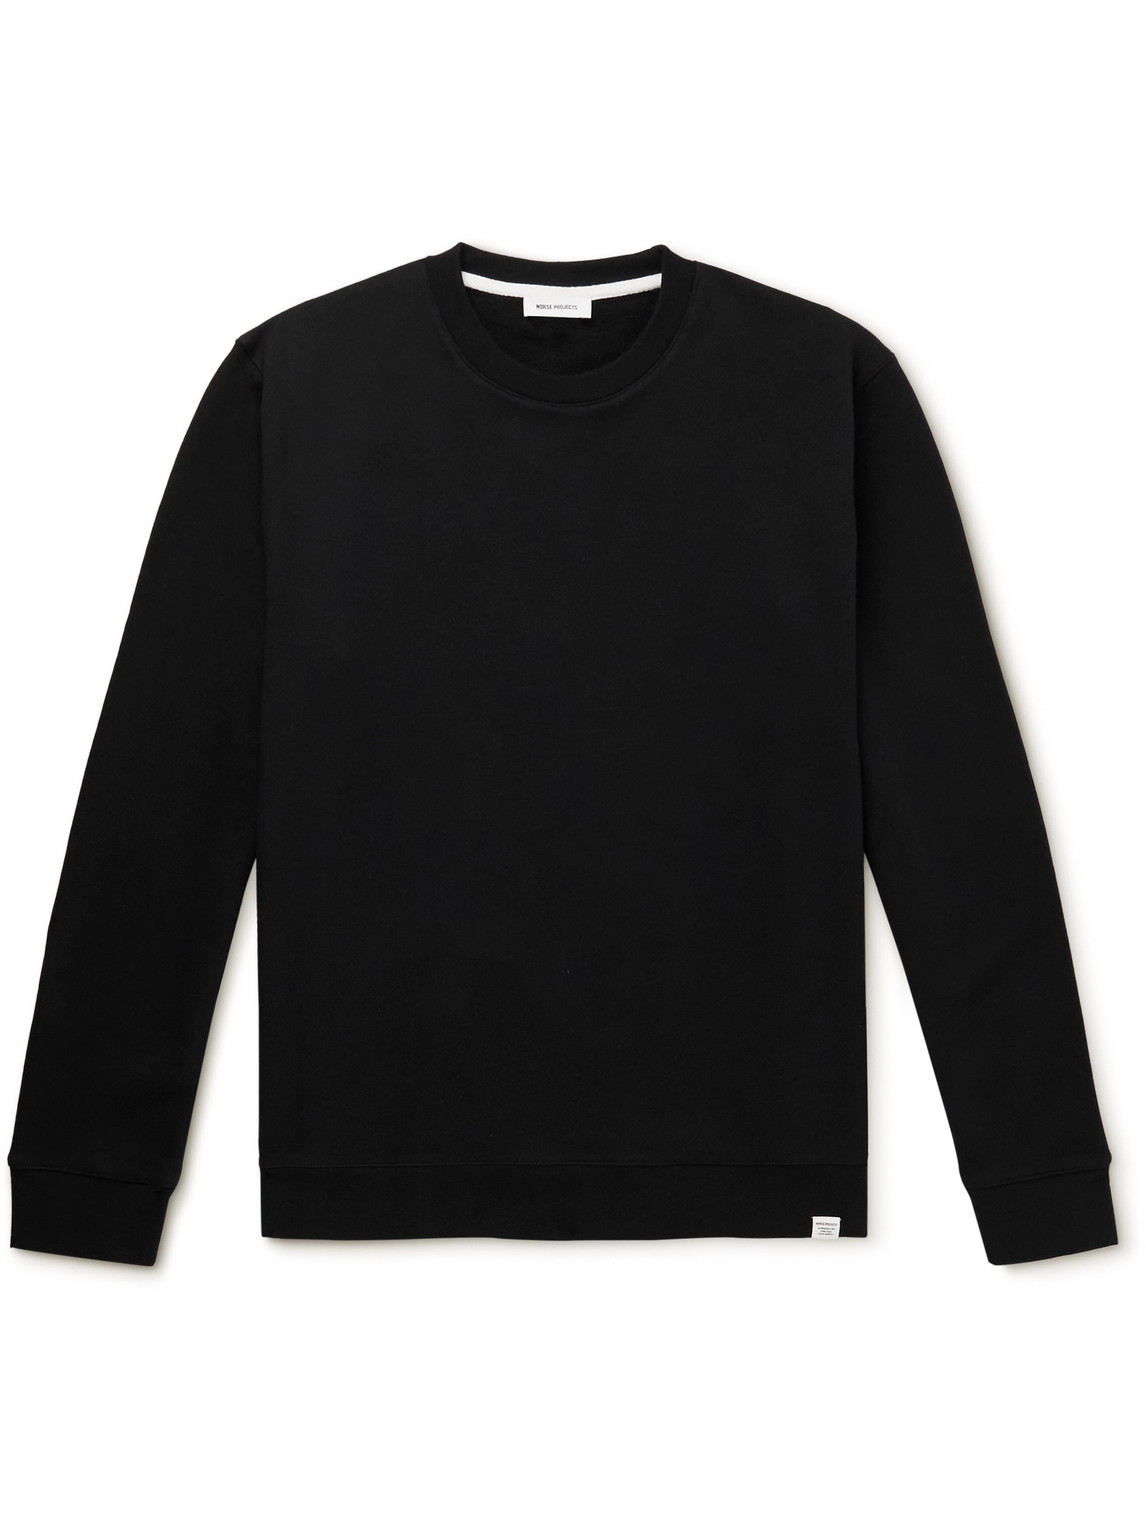 norse projects - vagn organic cotton-jersey sweatshirt - men - black - xs